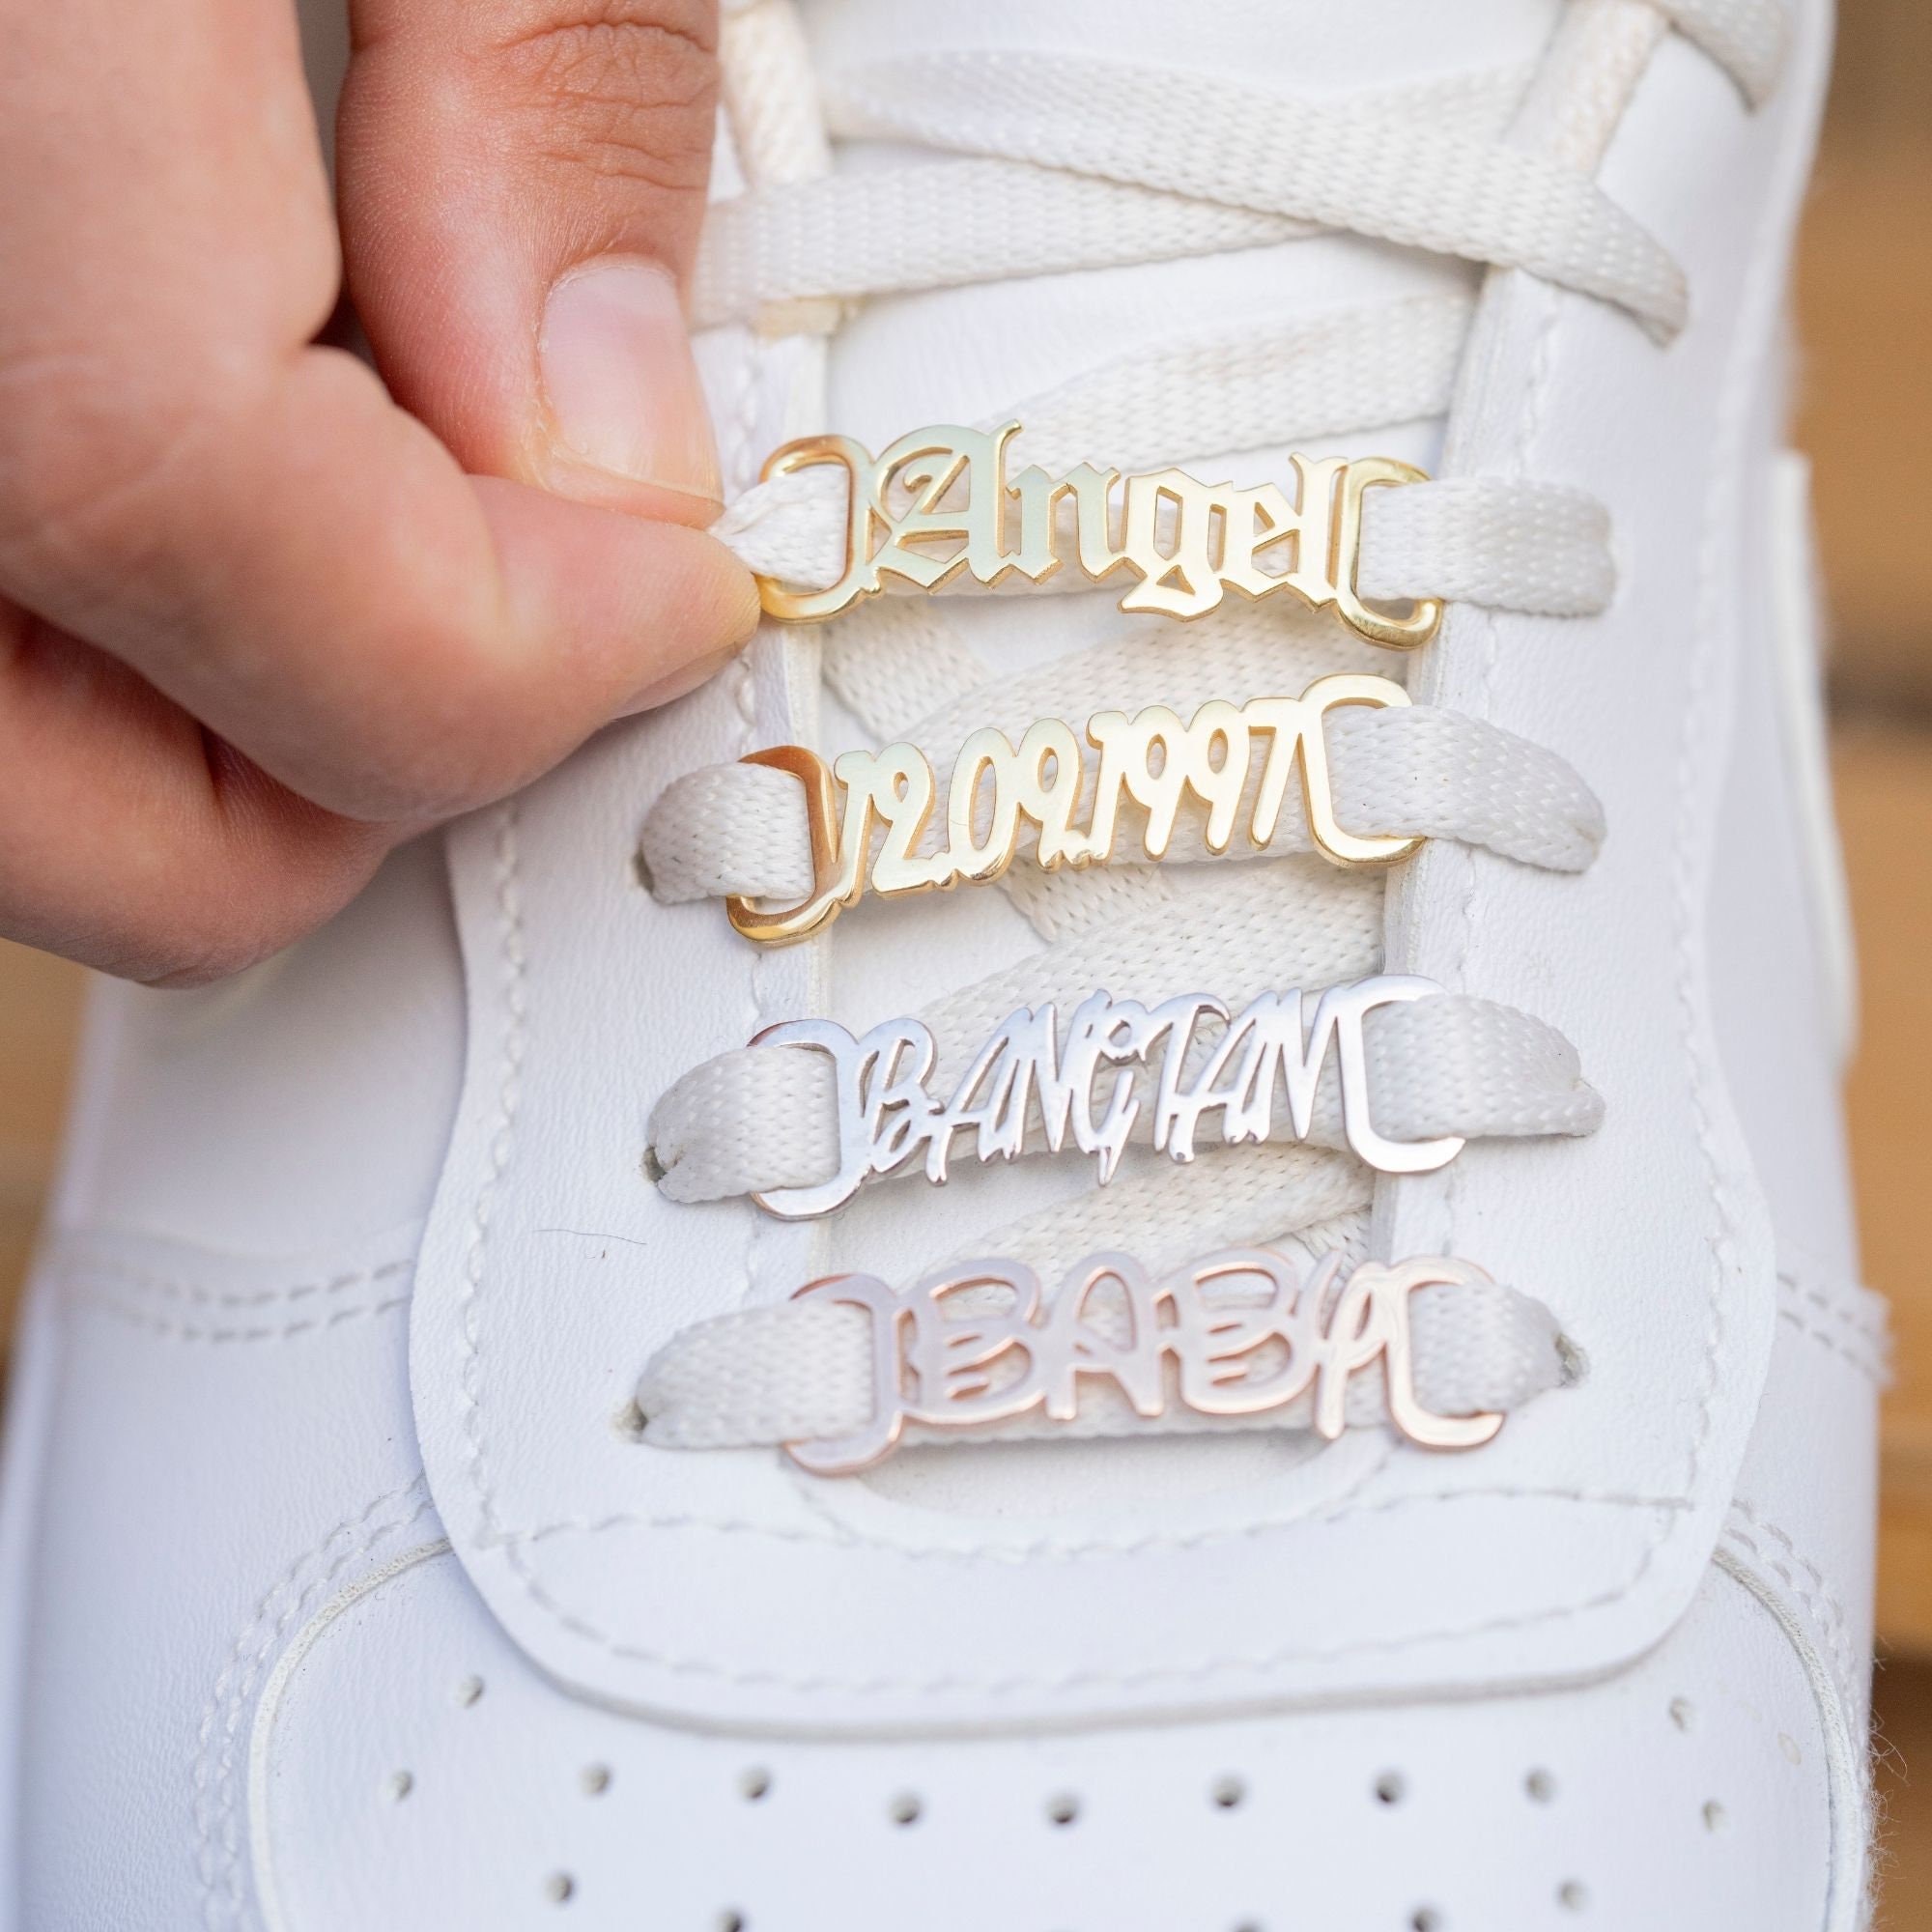 Значки на обувь  Lace lock, White sneaker, Unique items products